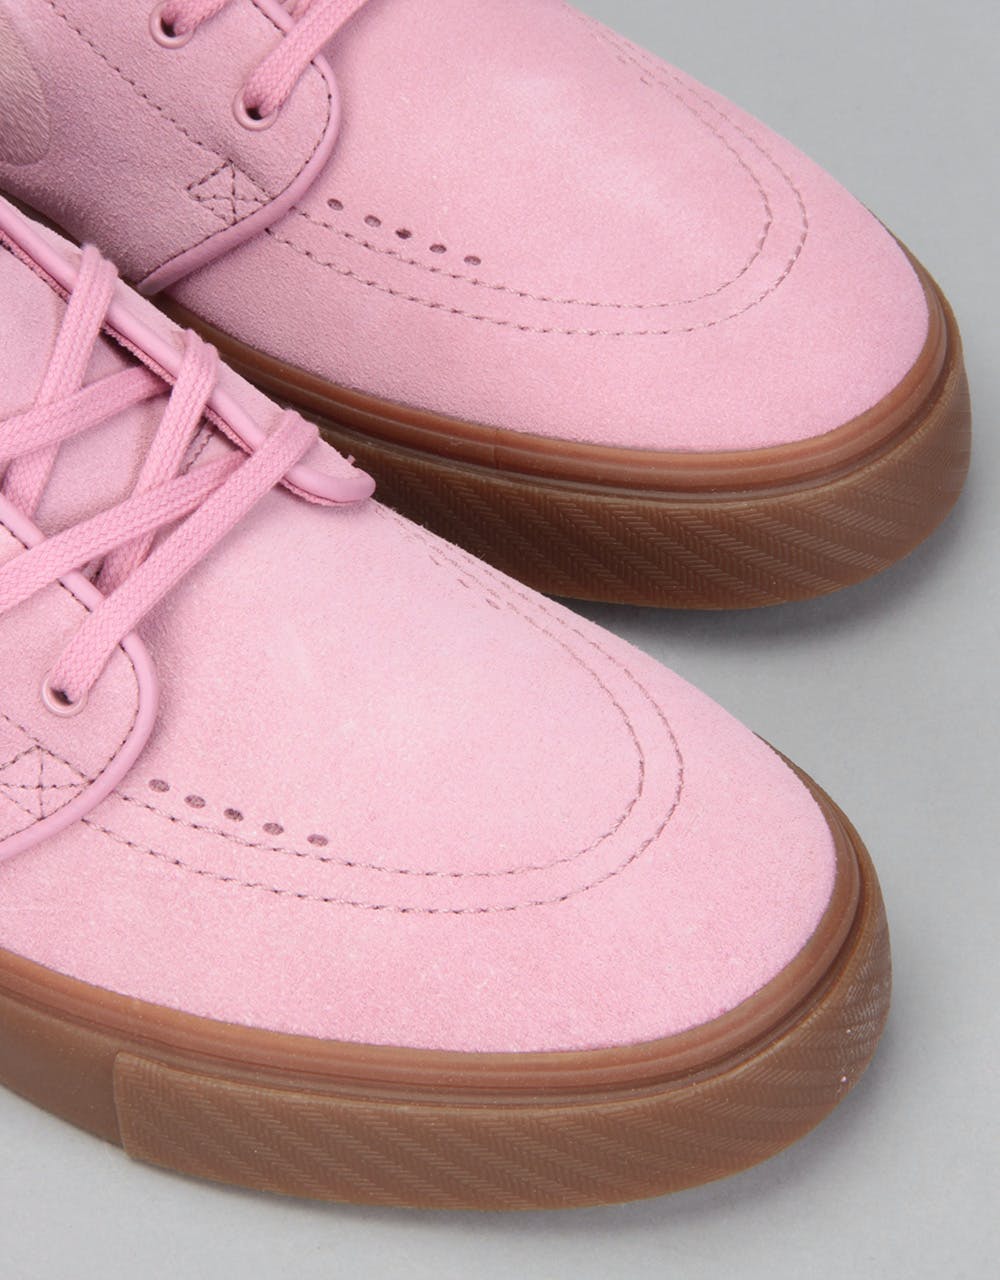 Nike SB Zoom Stefan Janoski Skate Shoes - Elemental Pink/Sequoia